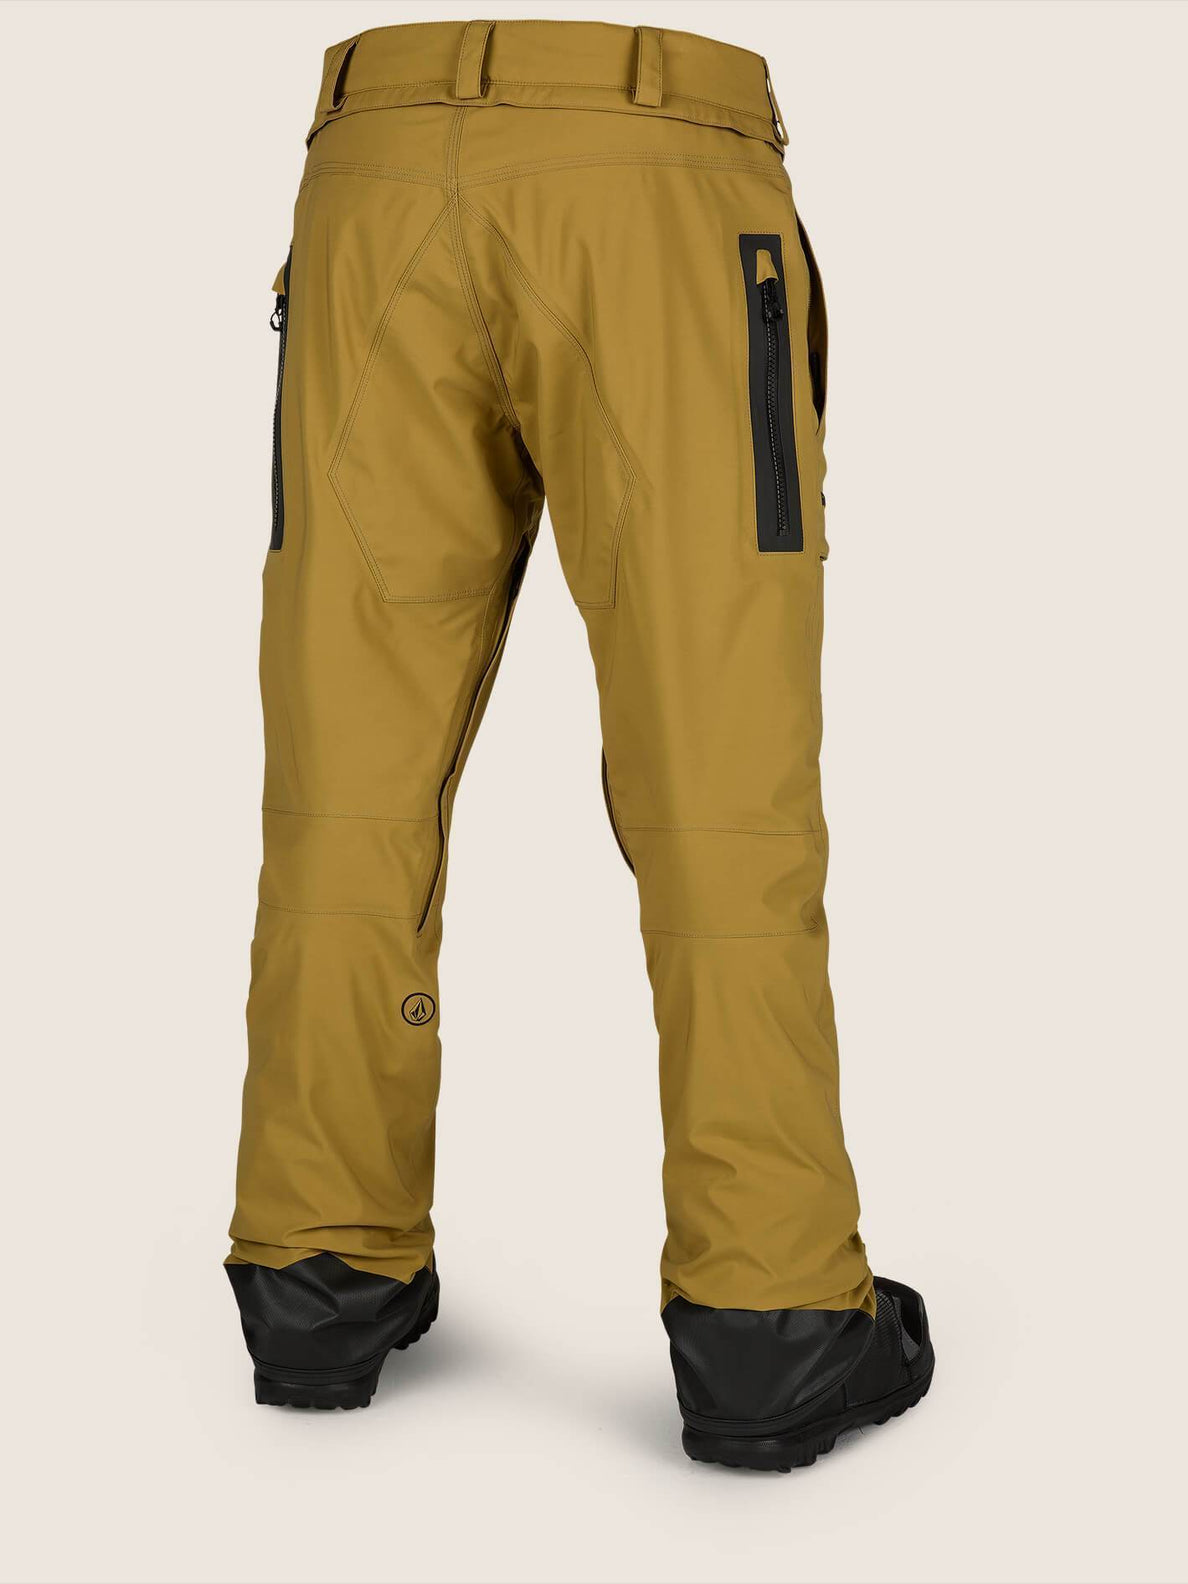 Pantalon de Snow Stretch Gore-Tex  - Resin Gold